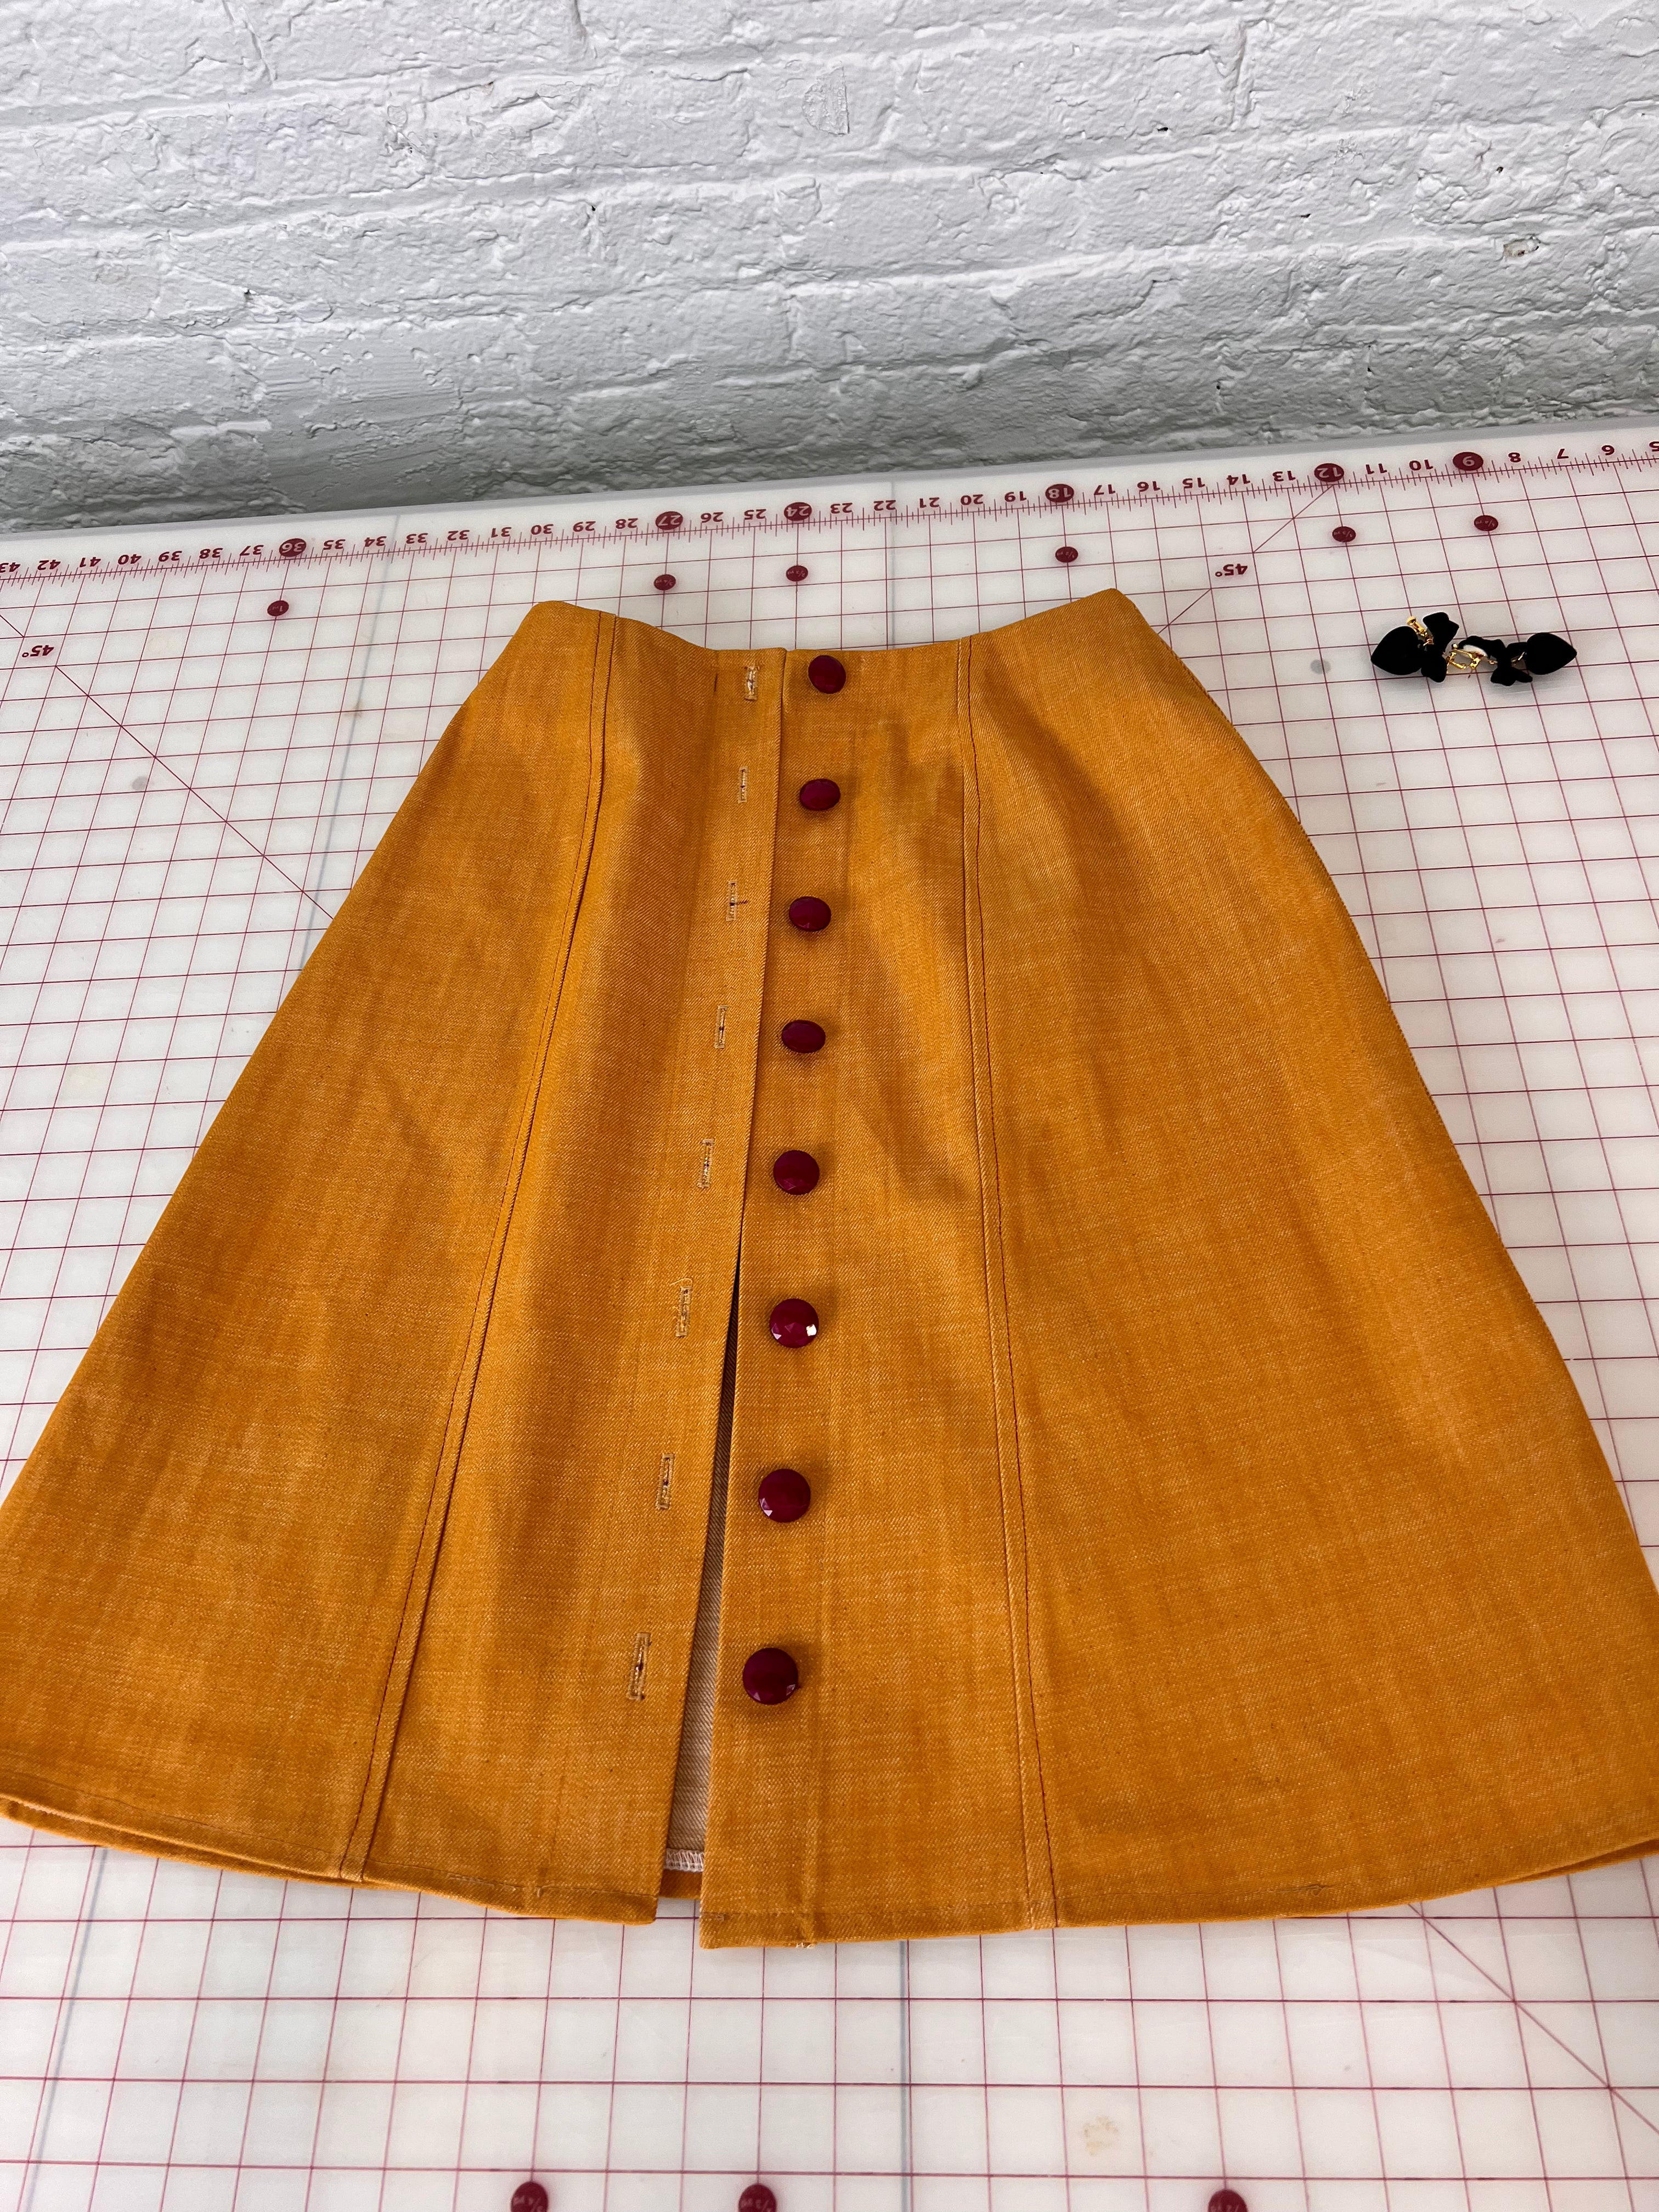 A line skirt PDF Sewing Pattern